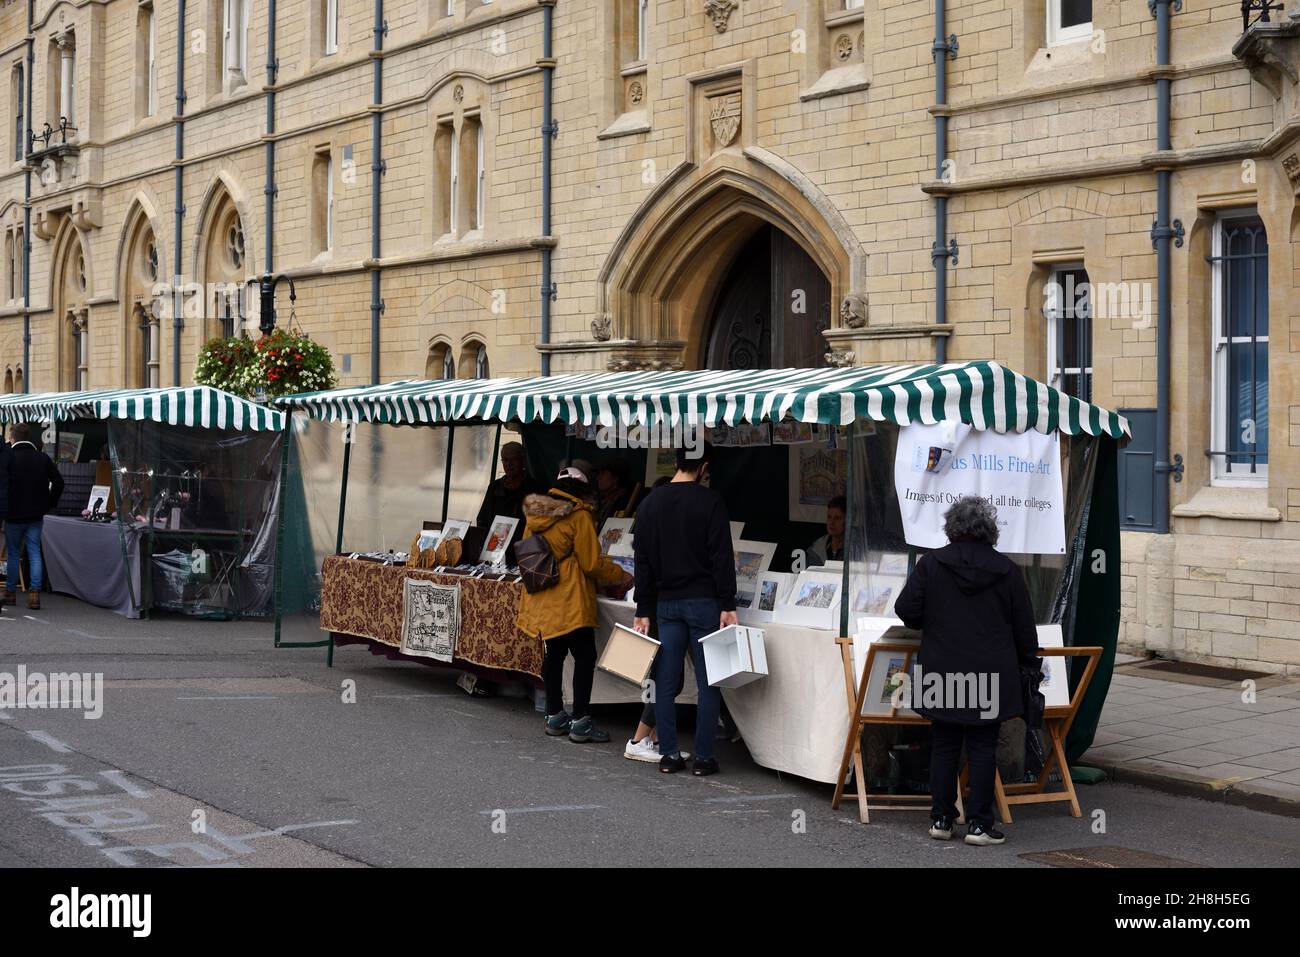 Mercado de la calle, Feria de Artesanía o Feria de Arte de Oxford, Inglaterra Foto de stock